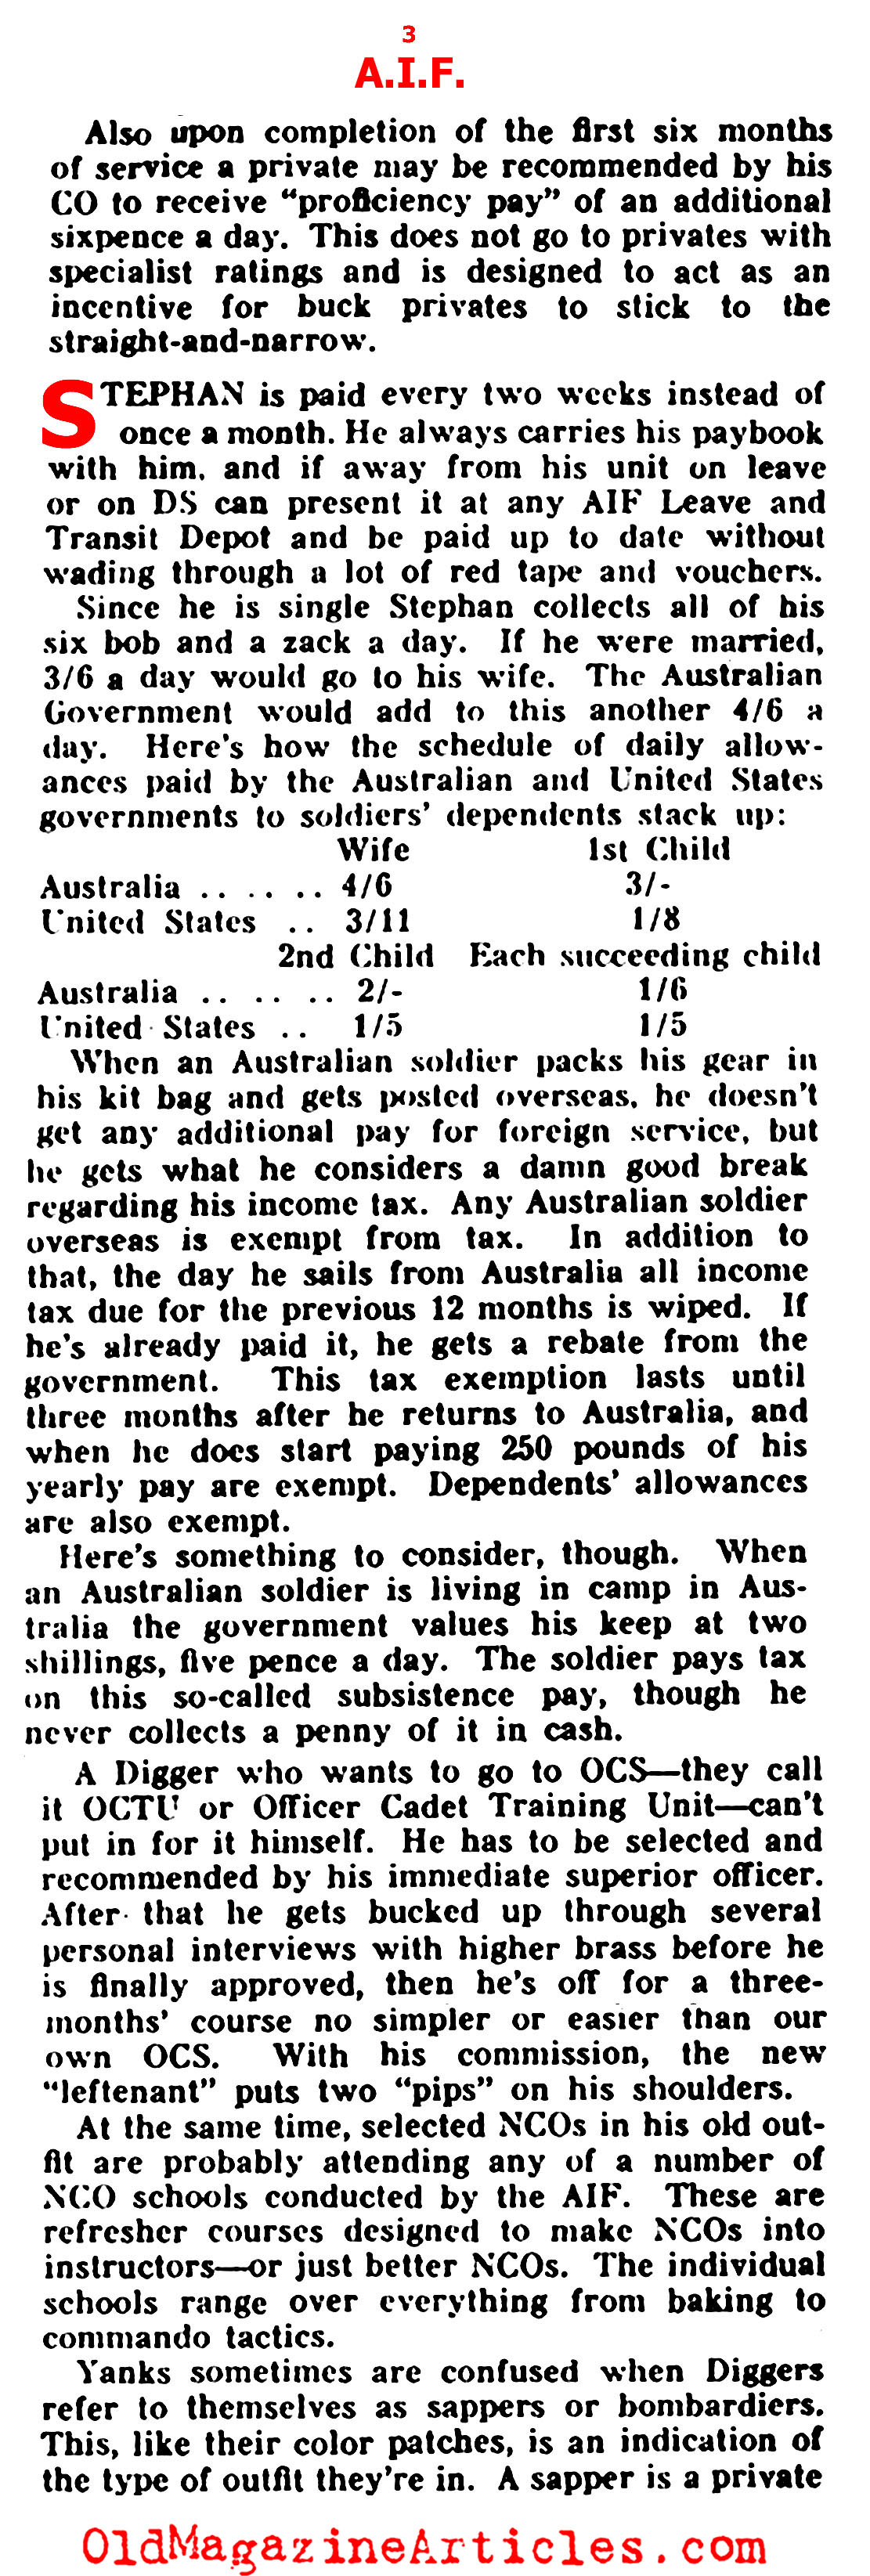 The Australian Soldier (Yank Magazine, 1944)